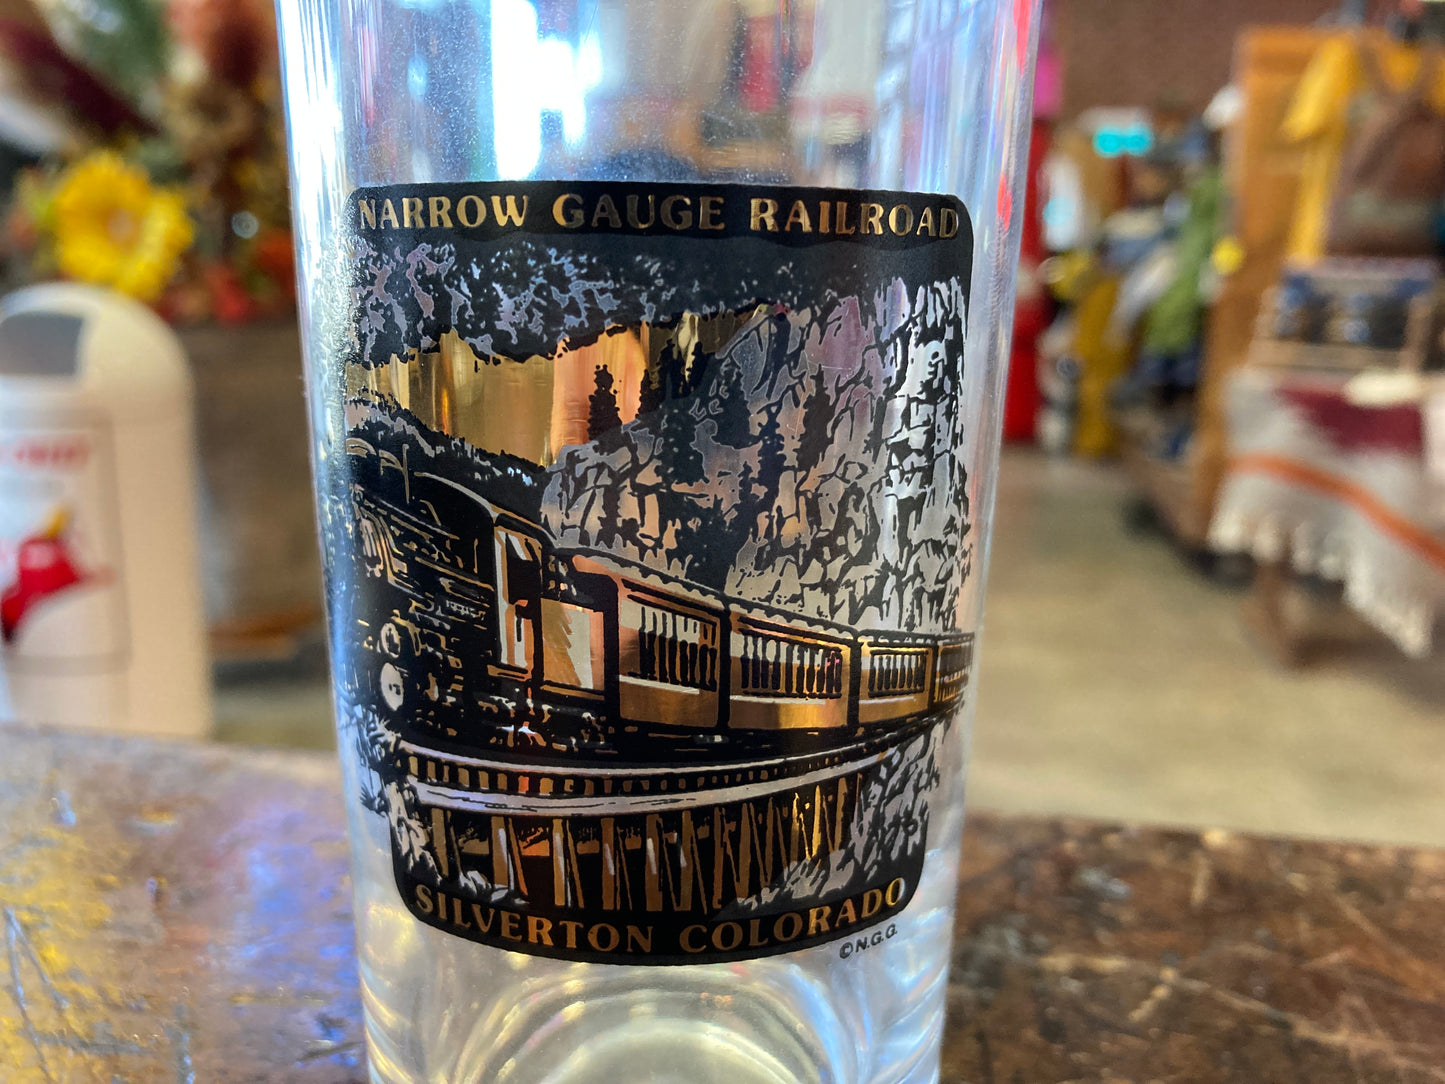 Narrow Gauge Railroad Silverton Colorado souvenir Glass